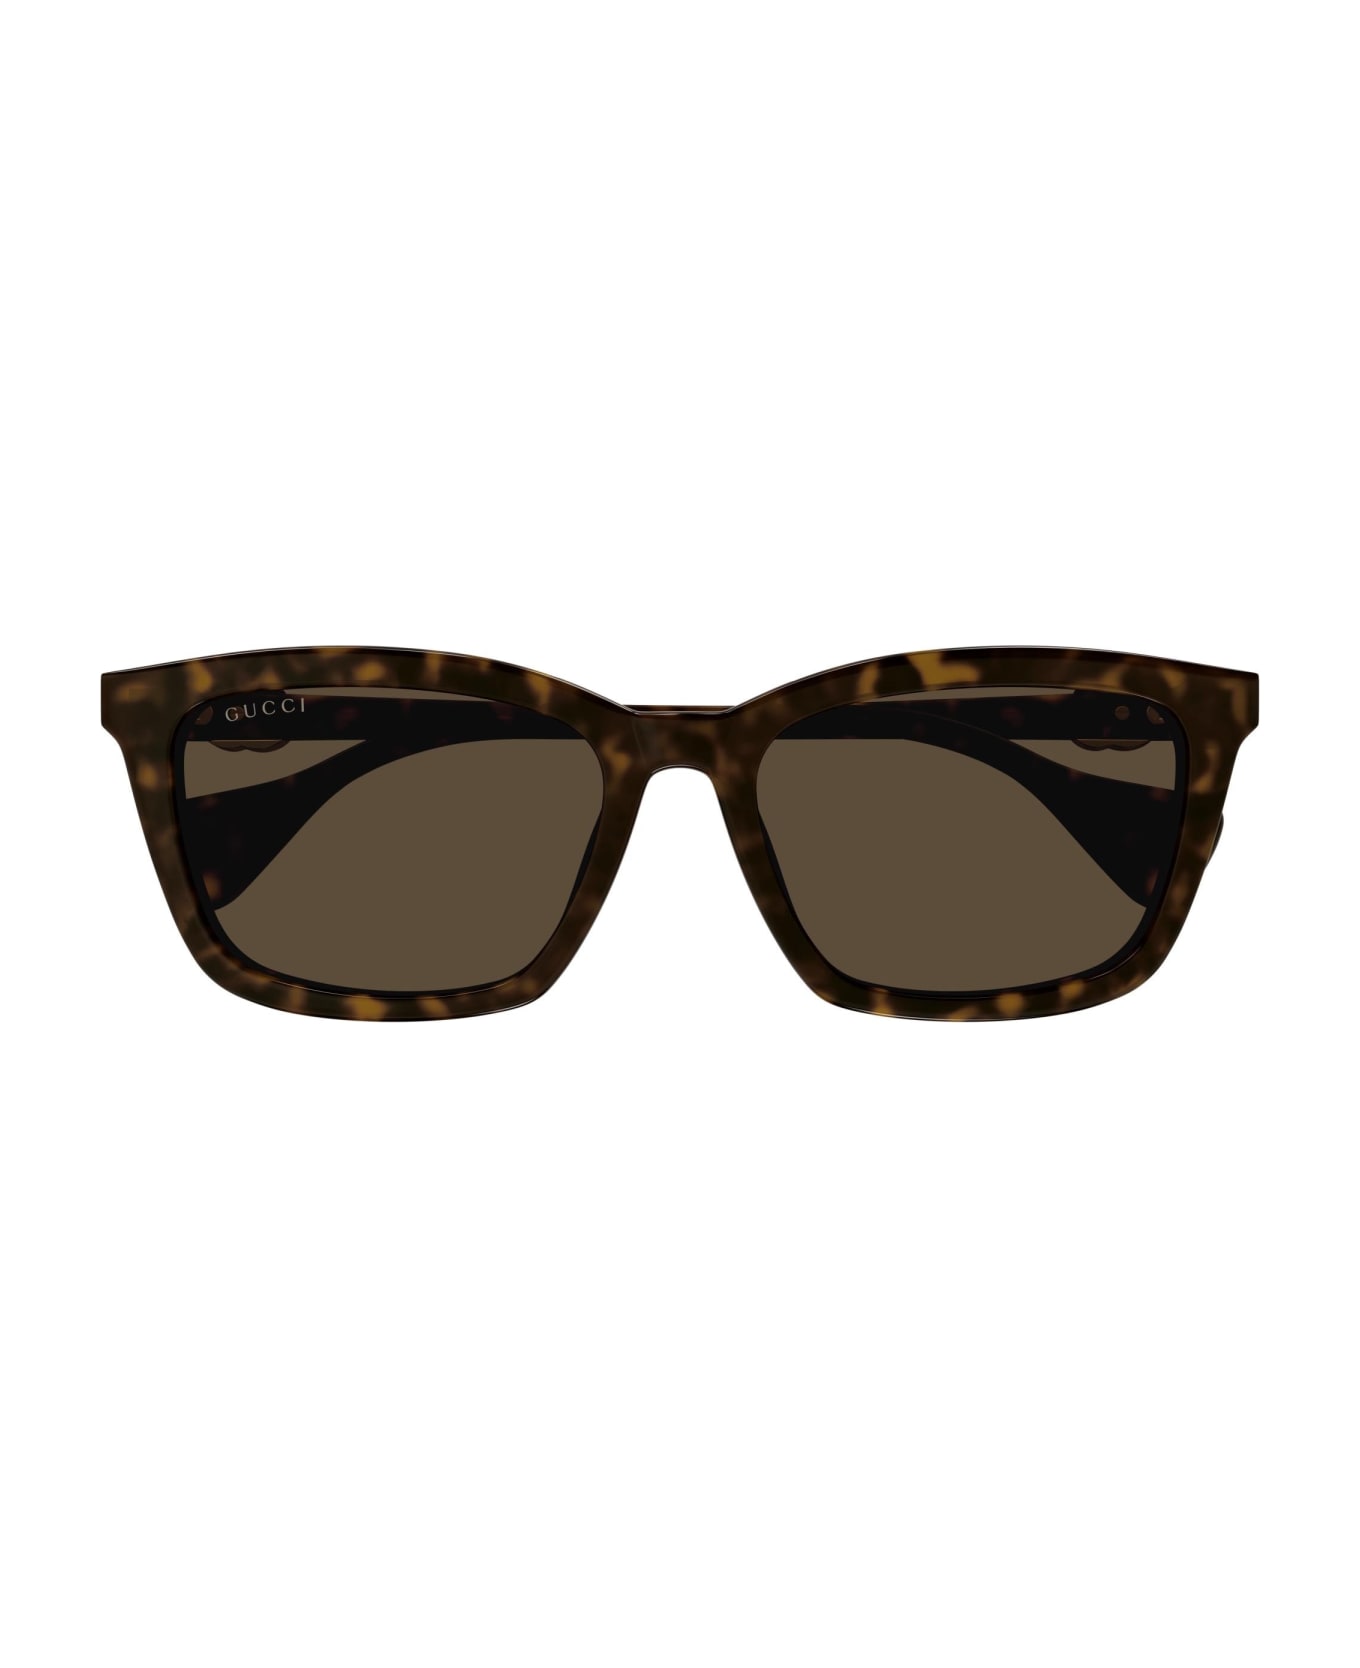 Gucci Eyewear Sunglasses - Marrone/Marrone